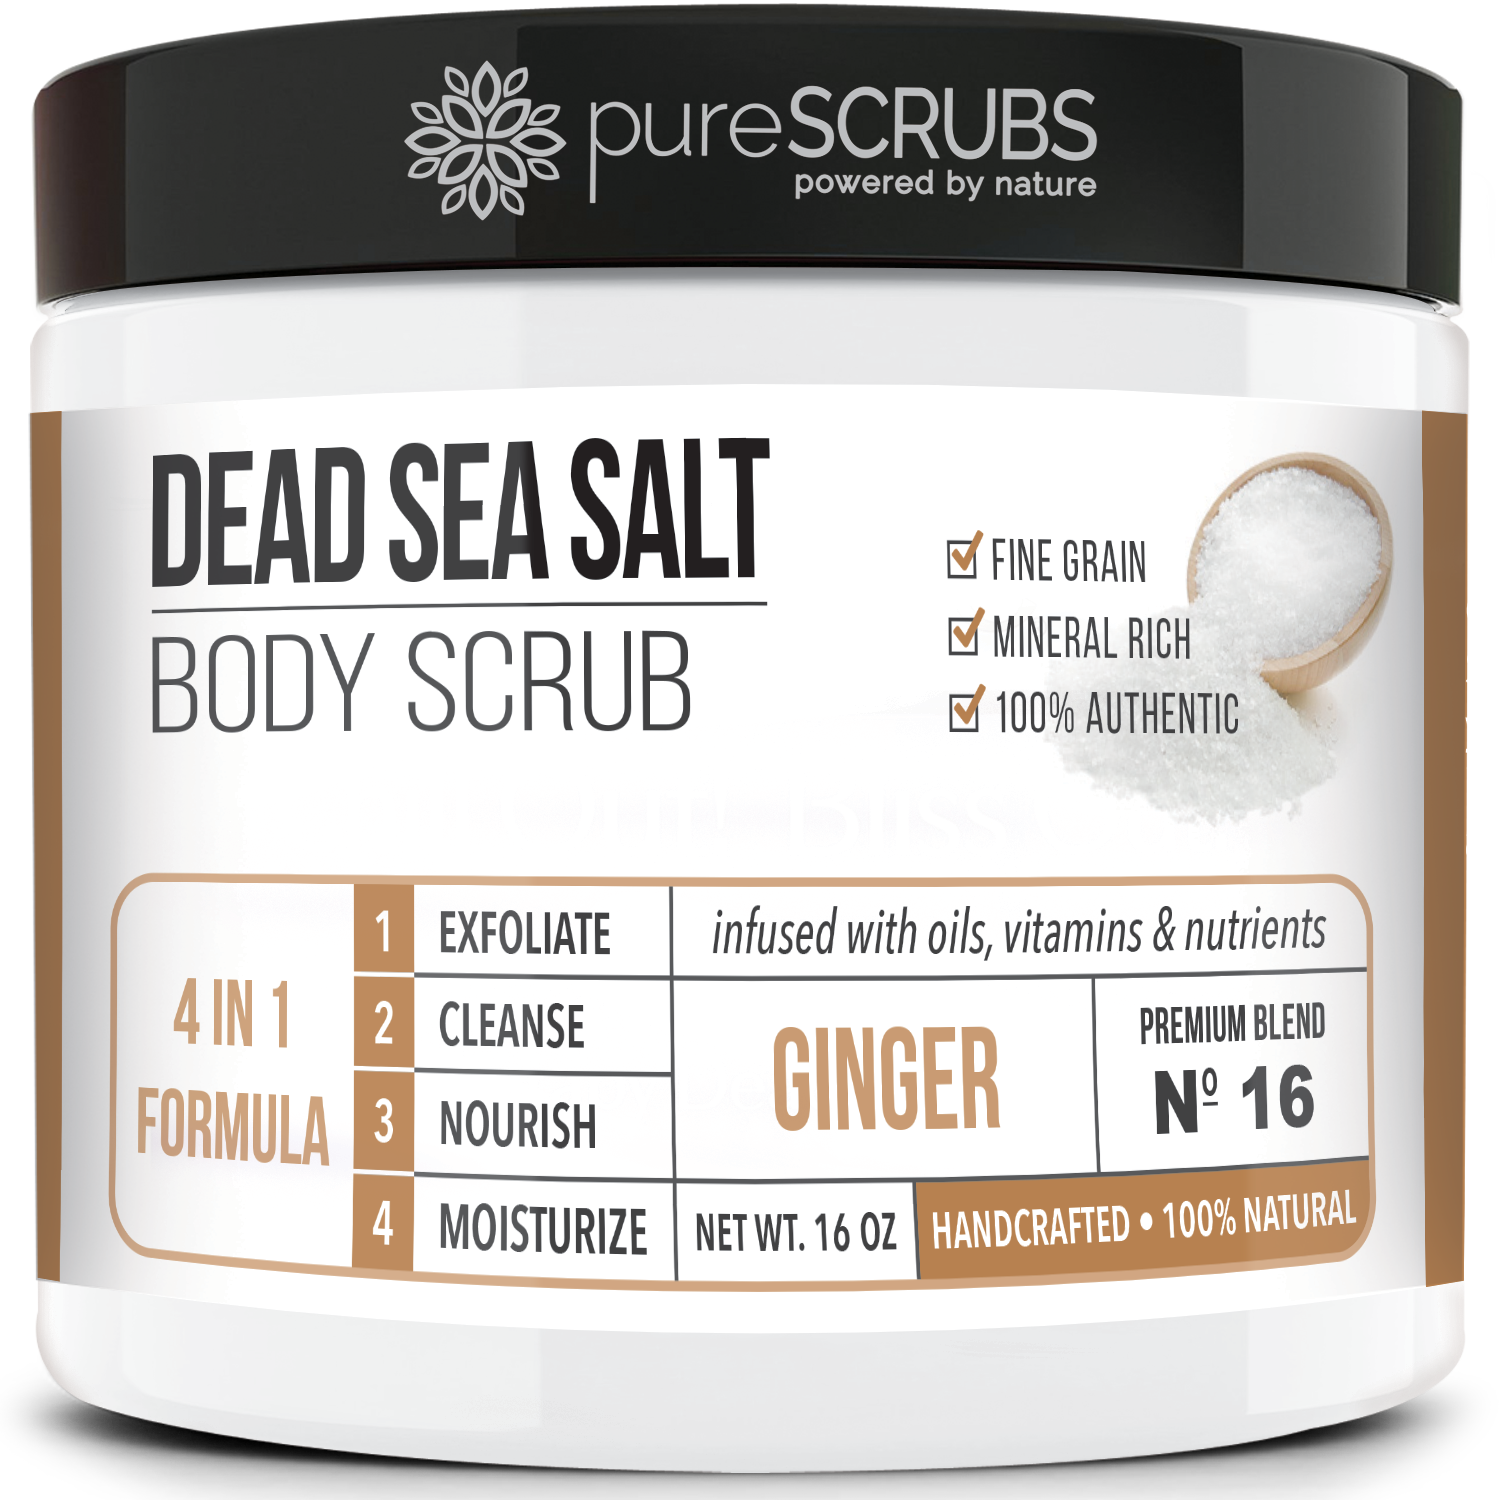 Ginger Body Scrub / Dead Sea Salt / Premium Blend #16